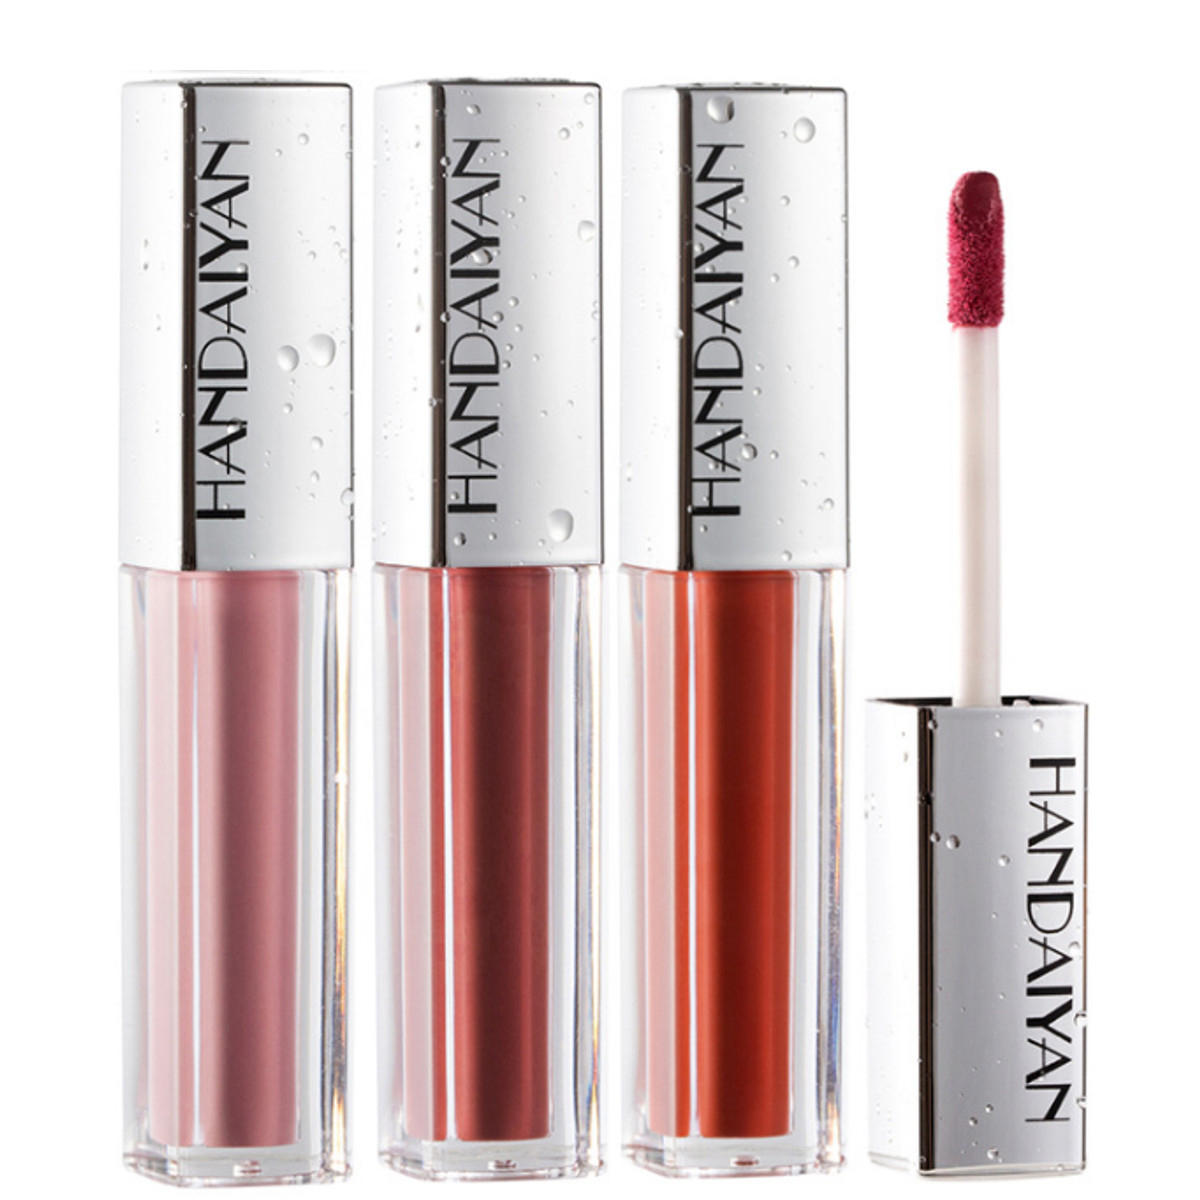 Aliexpress.com : Buy ROSALIND Cosmetics Lipstick Set 